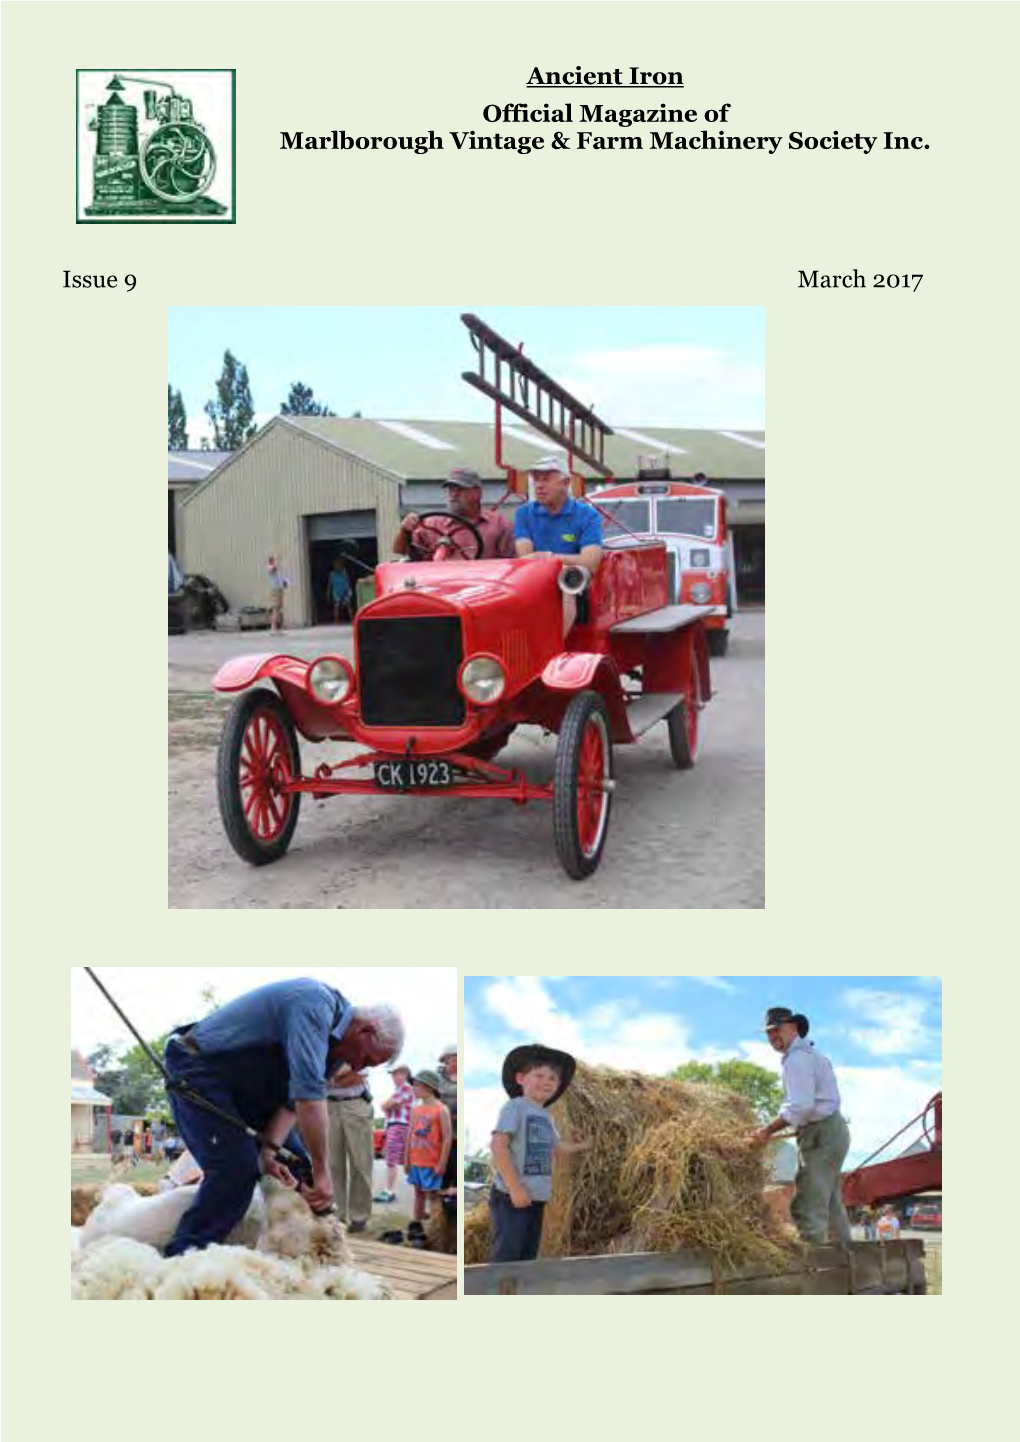 Ancient Iron Official Magazine of Marlborough Vintage & Farm Machinery Society Inc